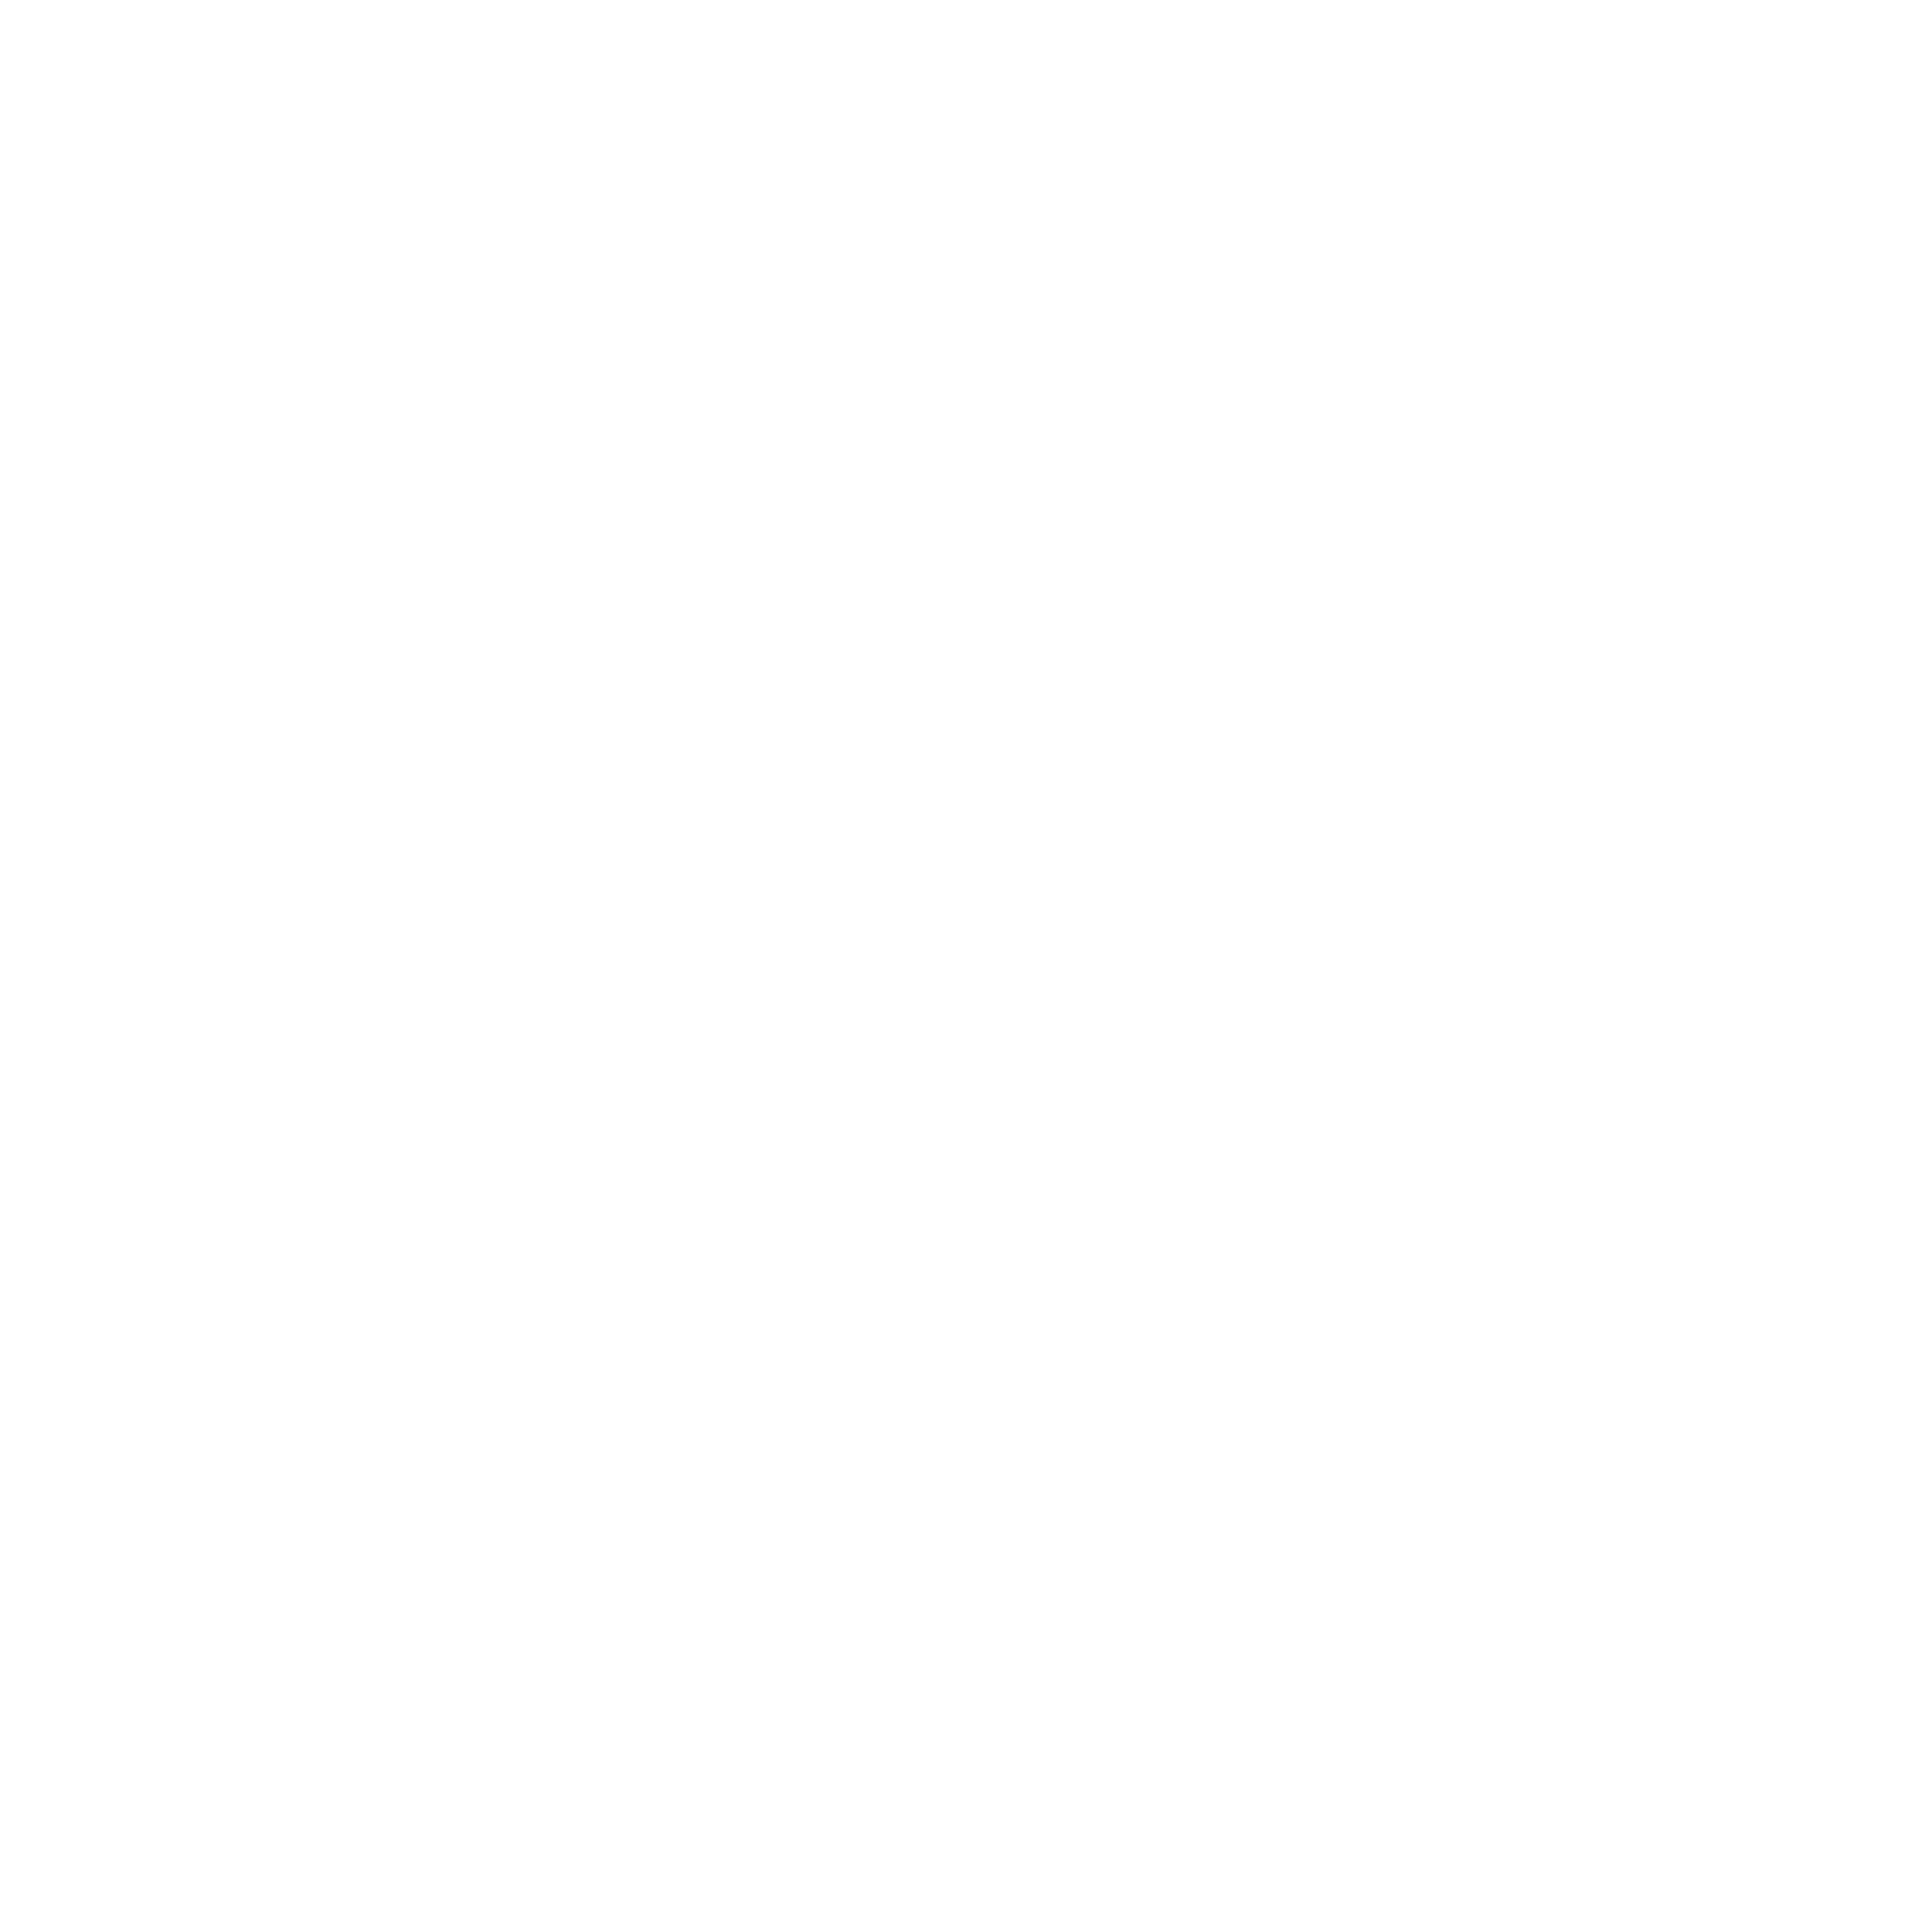 Owens Corning Logo - Owens Corning Logo PNG Transparent & SVG Vector